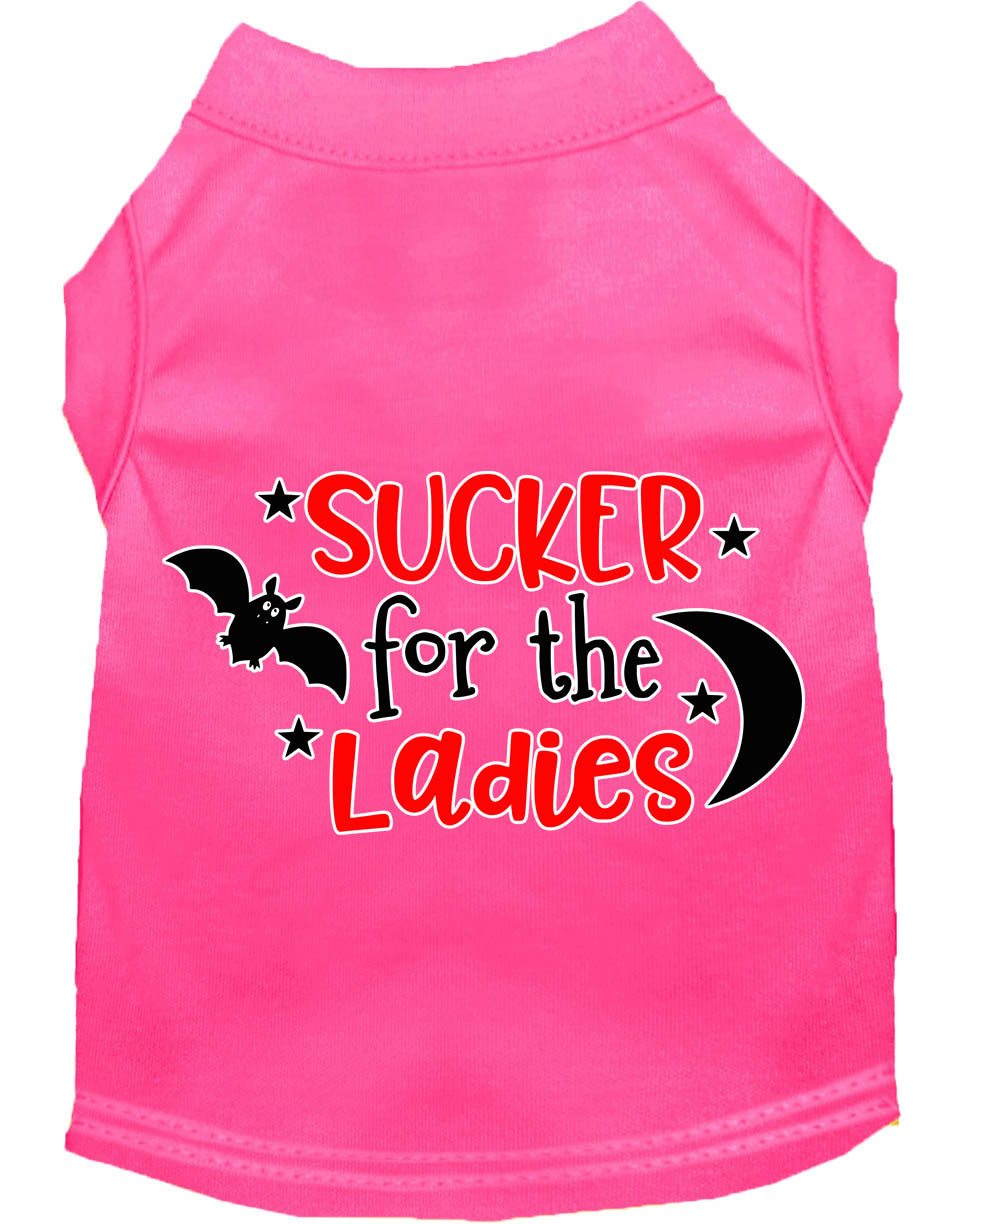 Sucker for the Ladies Screen Print Dog Shirt Bright Pink XL